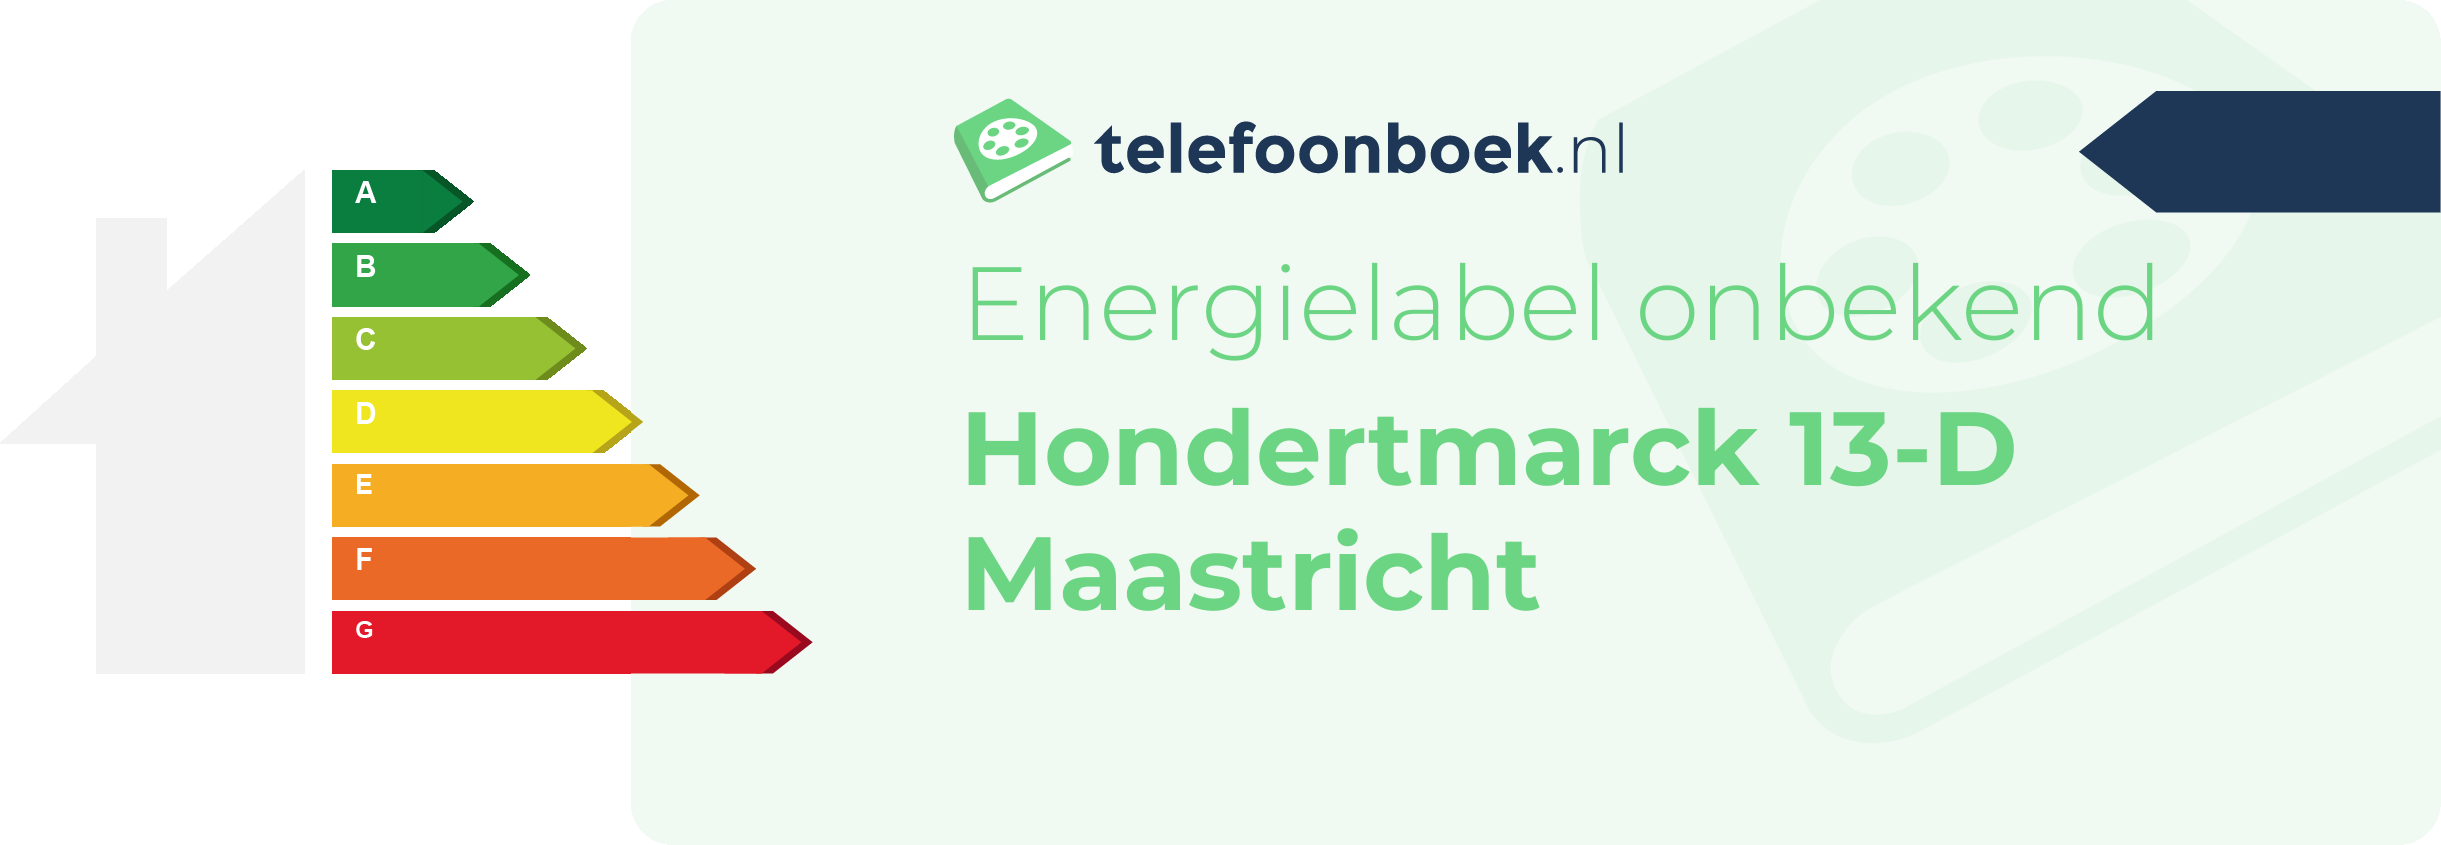 Energielabel Hondertmarck 13-D Maastricht